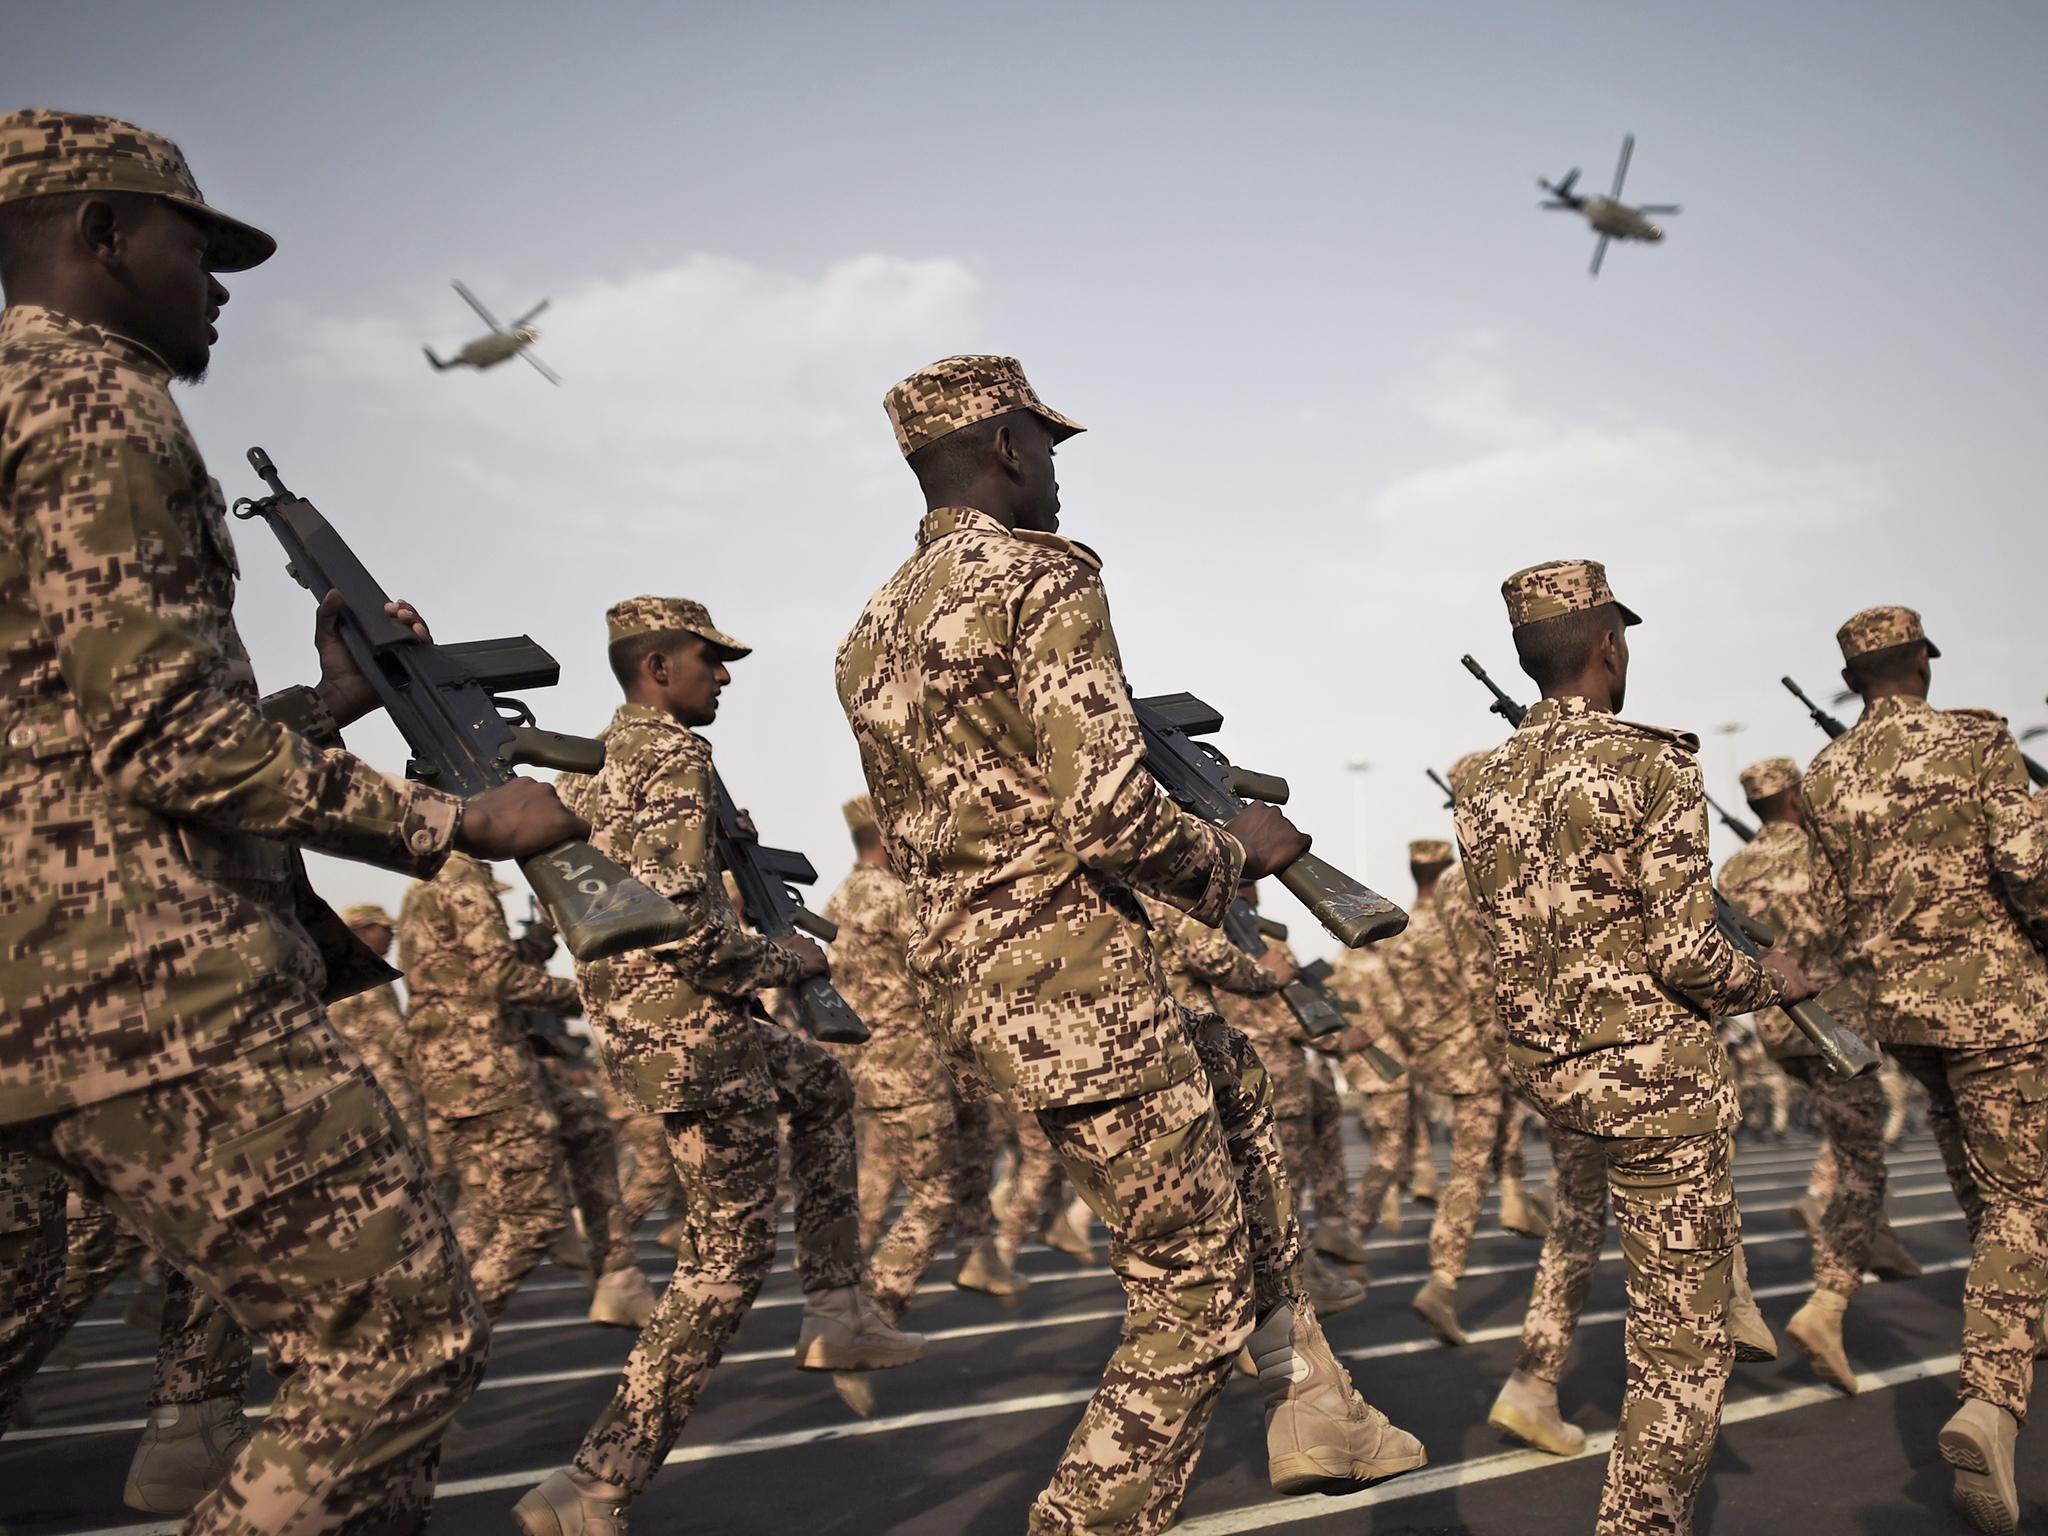 Saudi Arabian security forces on parade